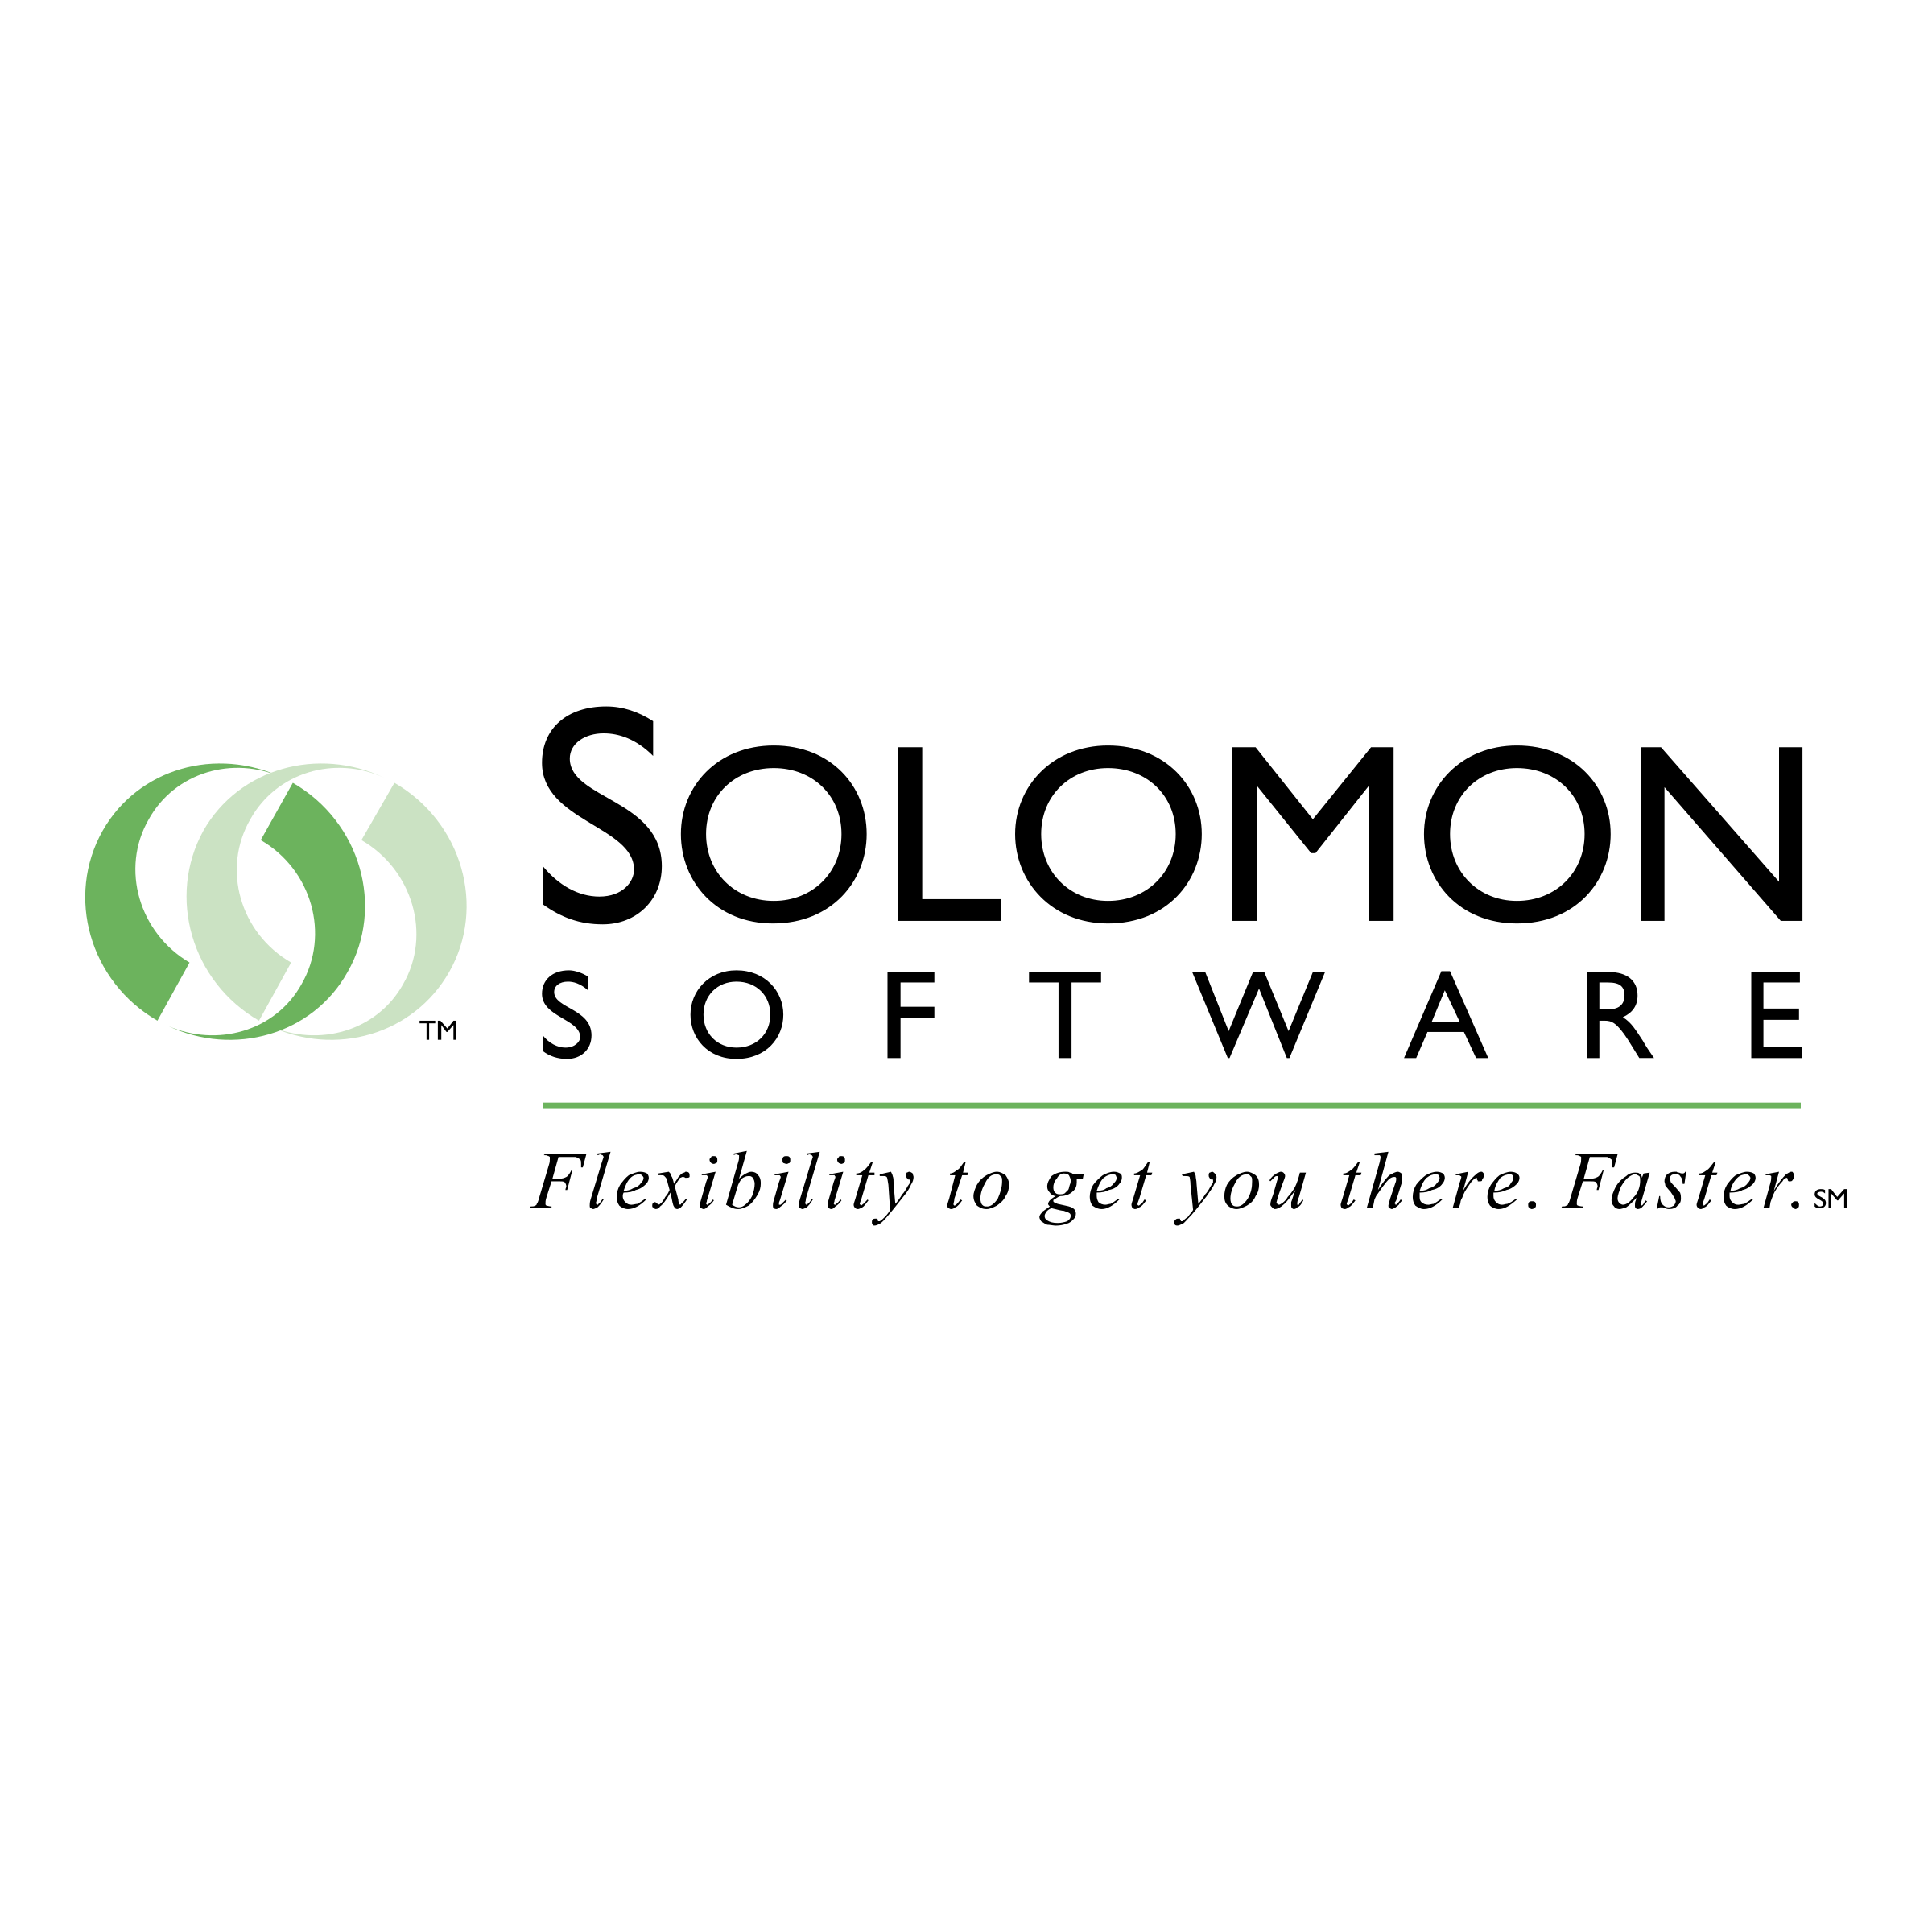 Solomon Logo - Solomon Software Logo PNG Transparent & SVG Vector - Freebie Supply